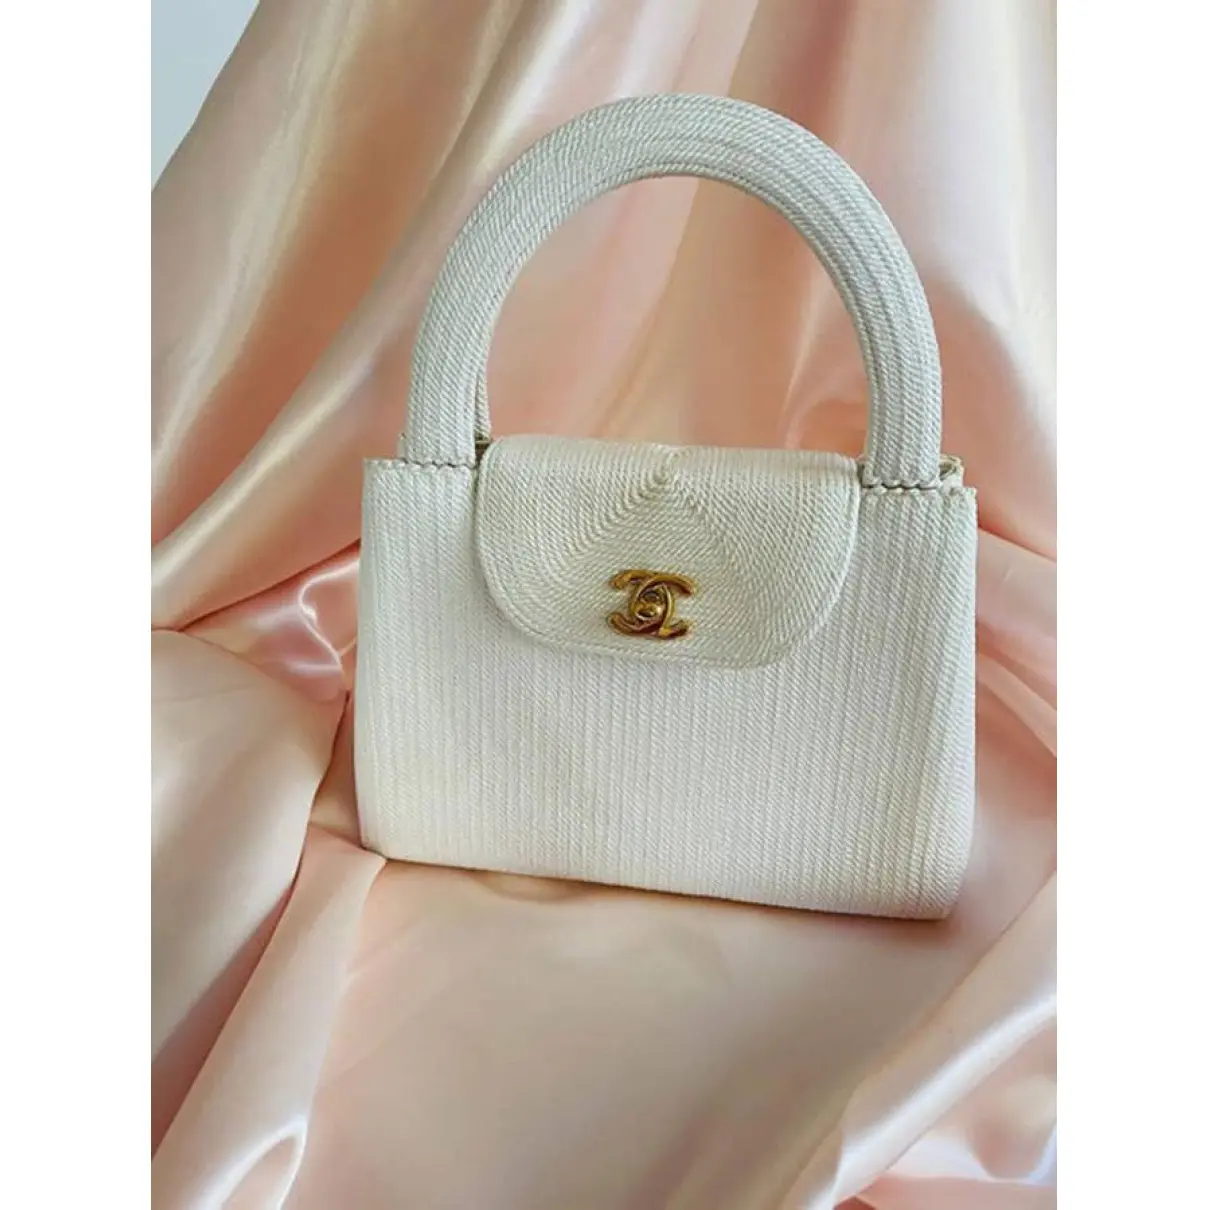 Buy Chanel Silk satchel online - Vintage